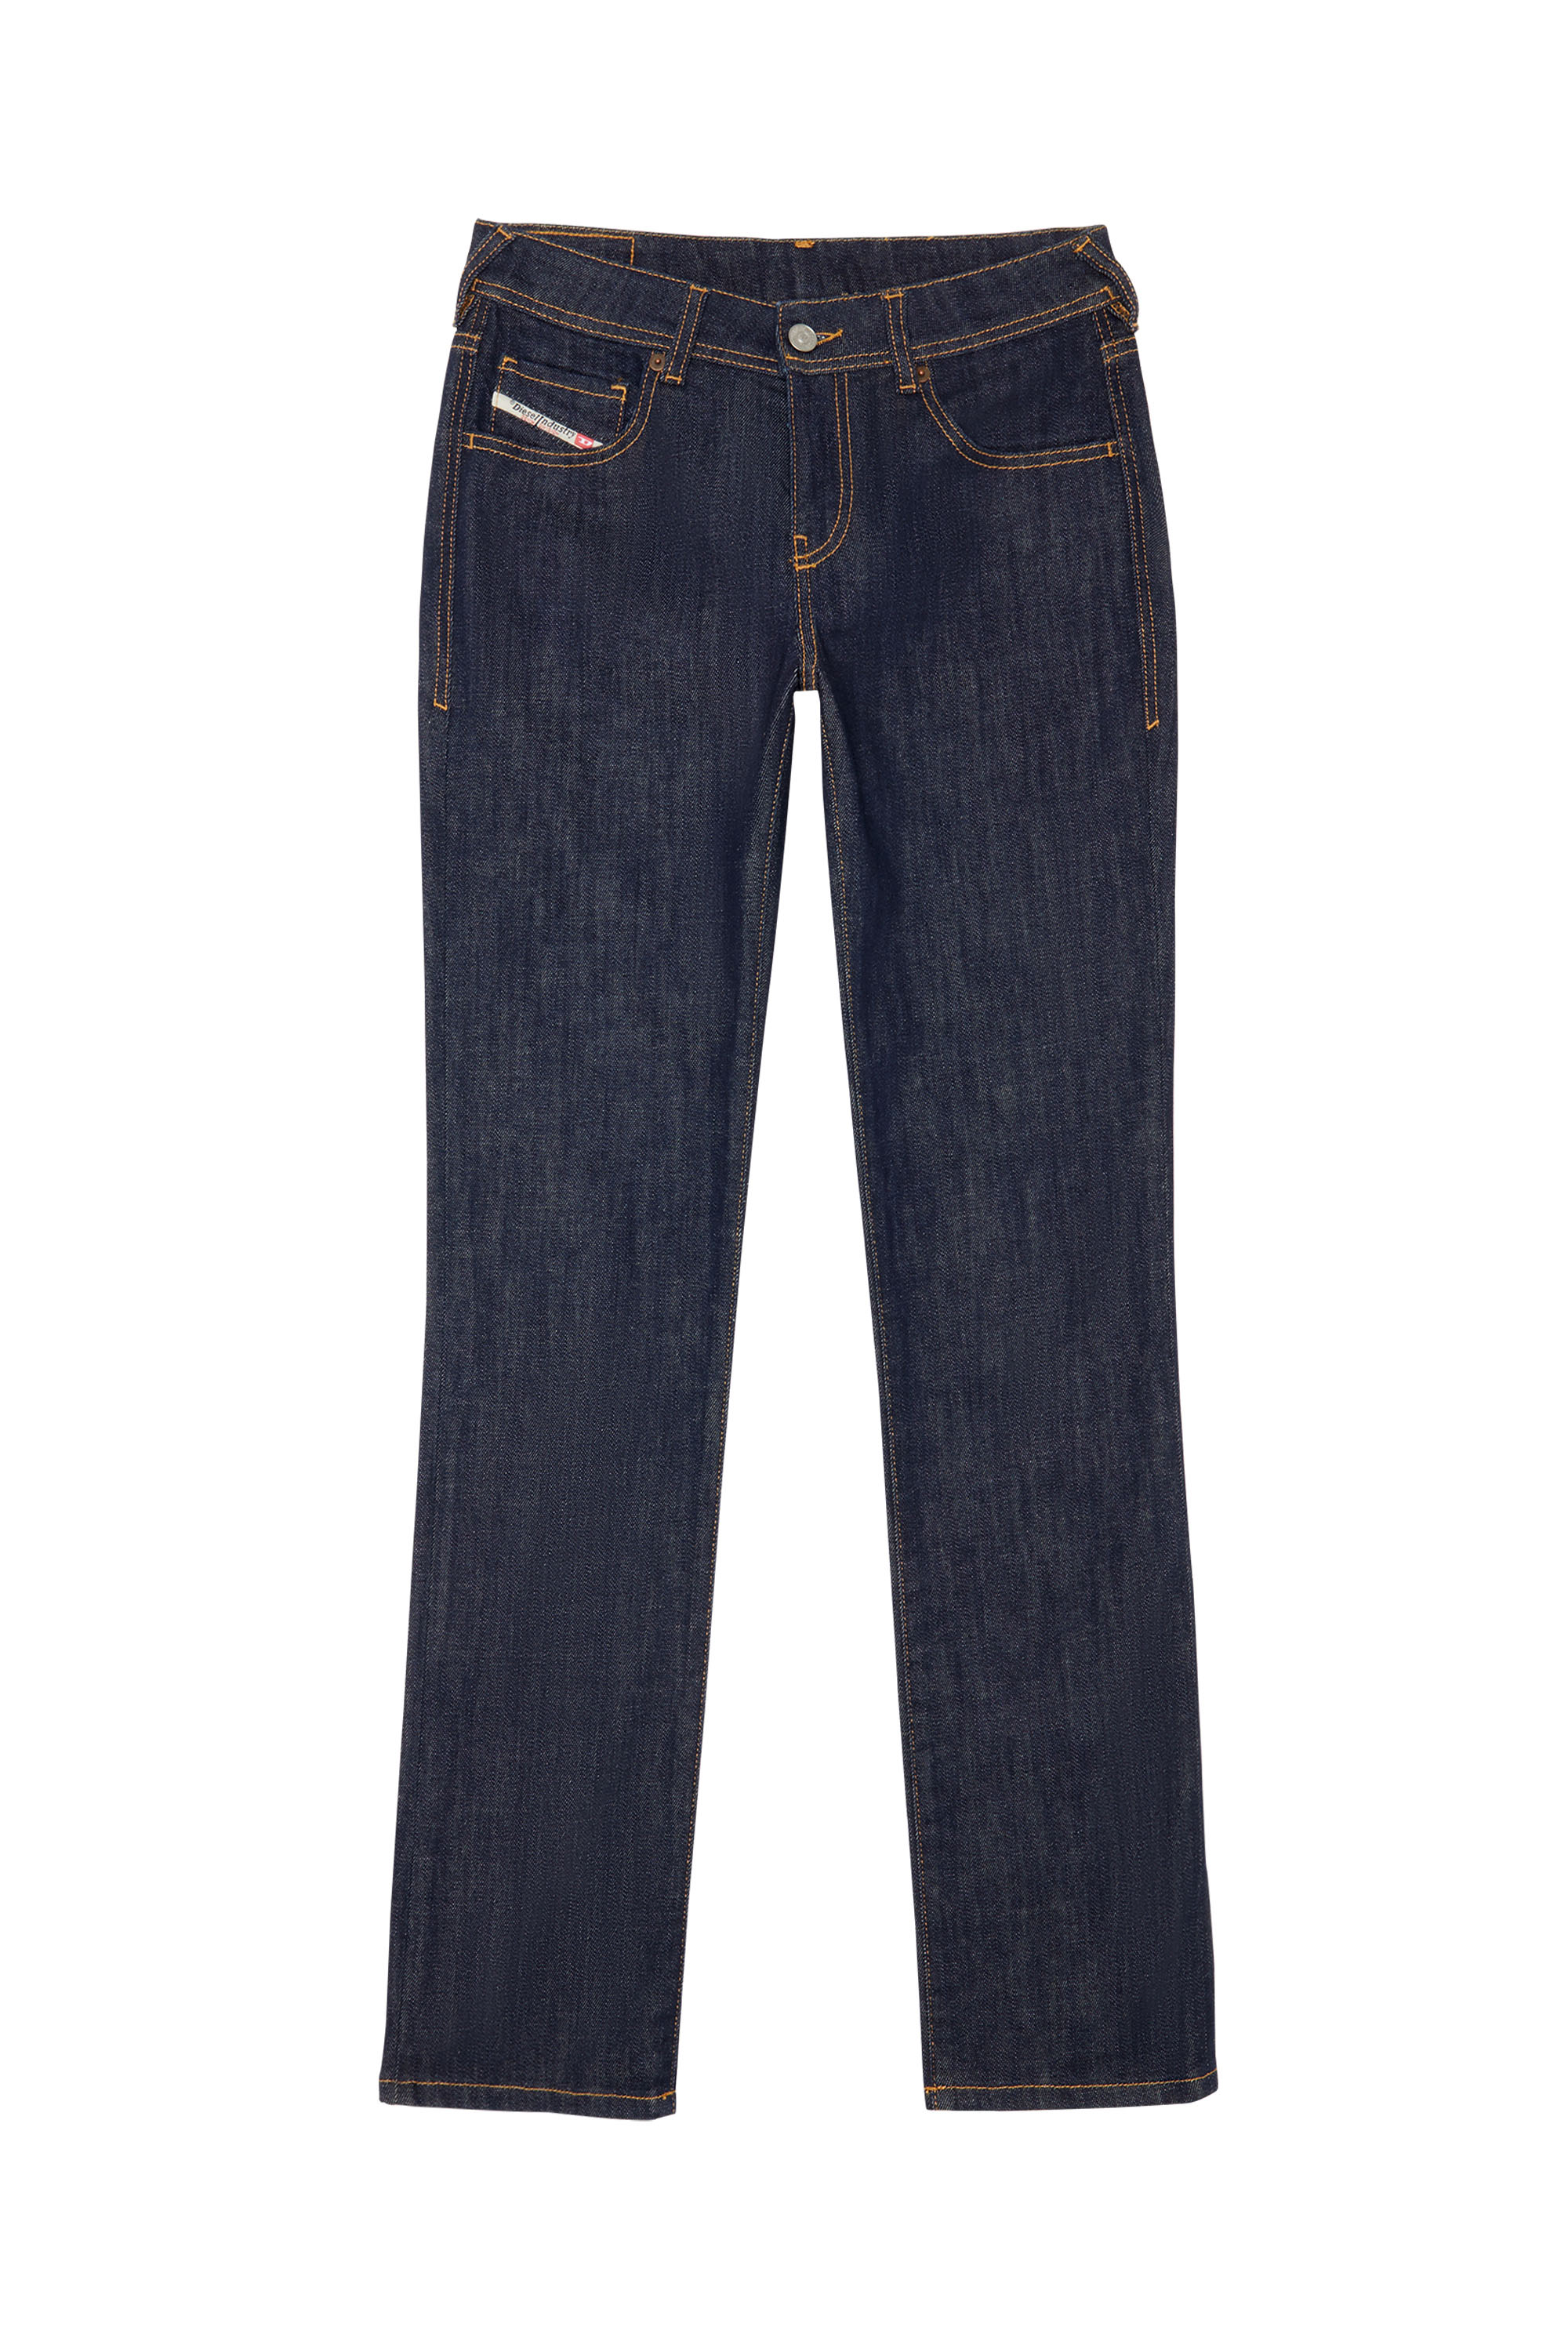 2002 Z9B89 Straight Jeans, Dark Blue - Jeans